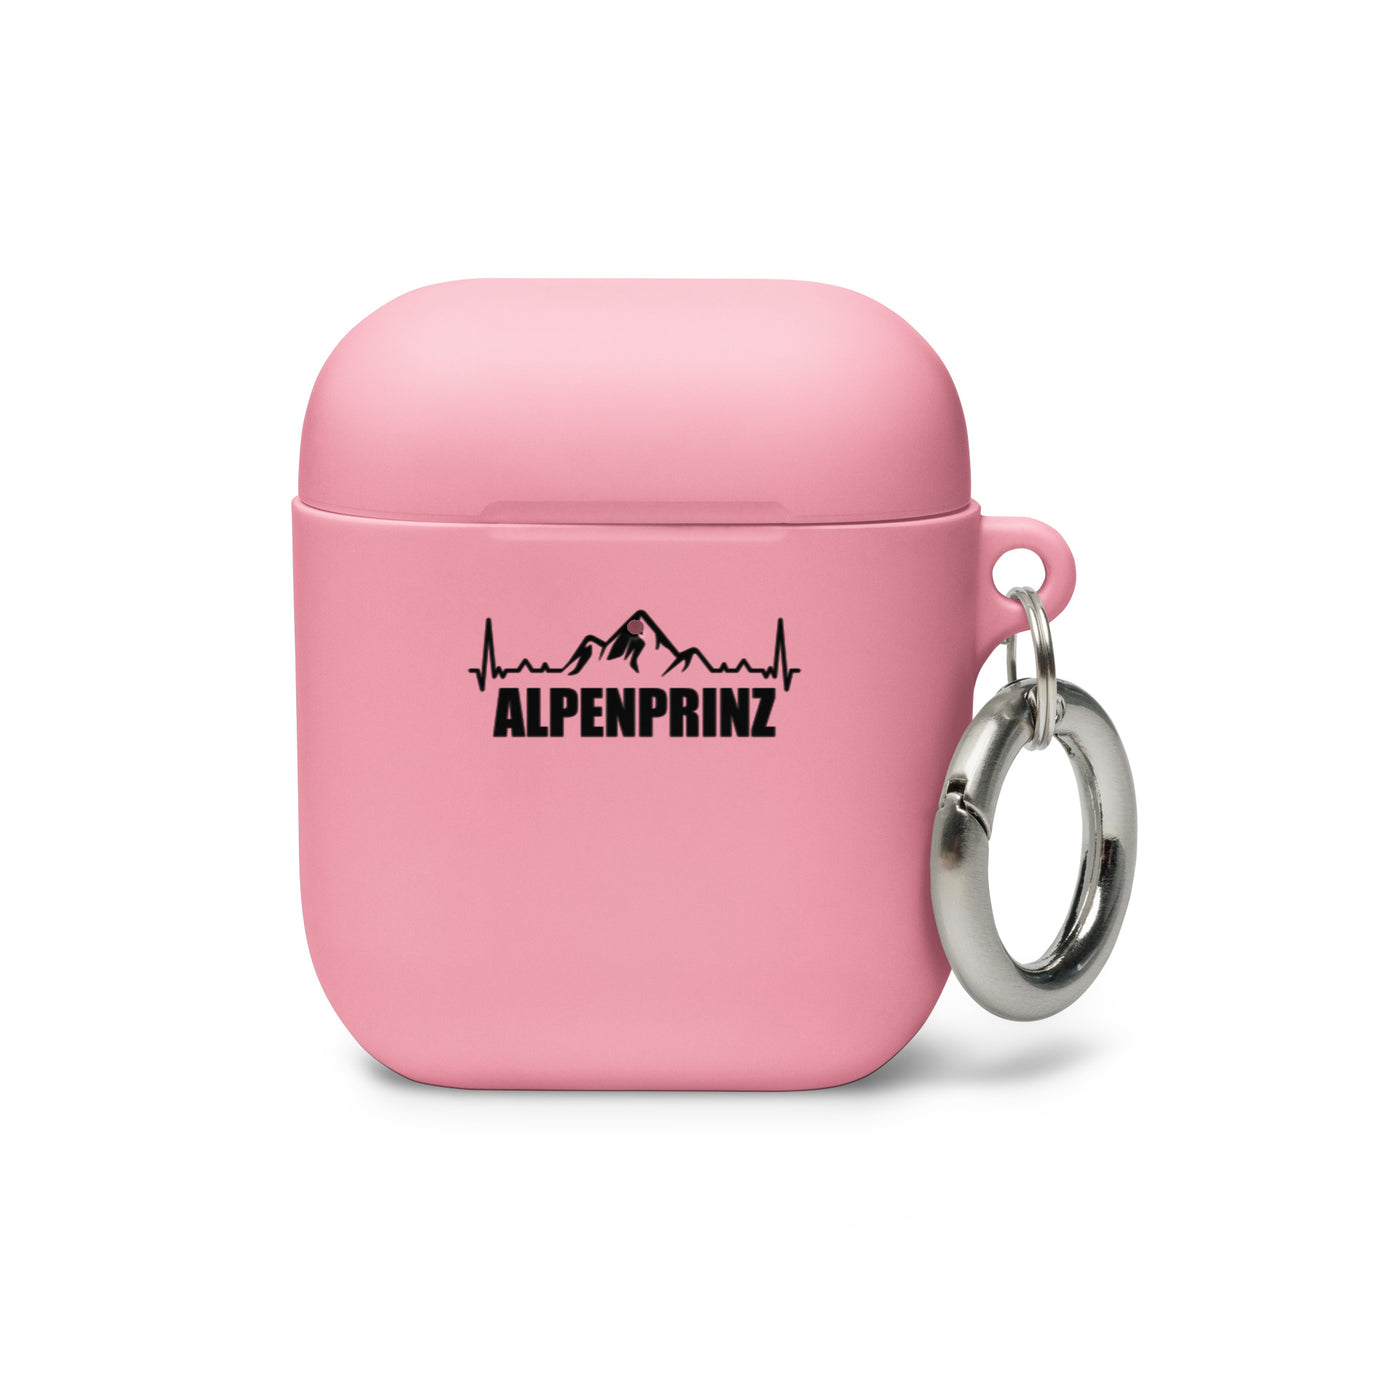 Alpenprinz 1 - AirPods Case berge Pink AirPods